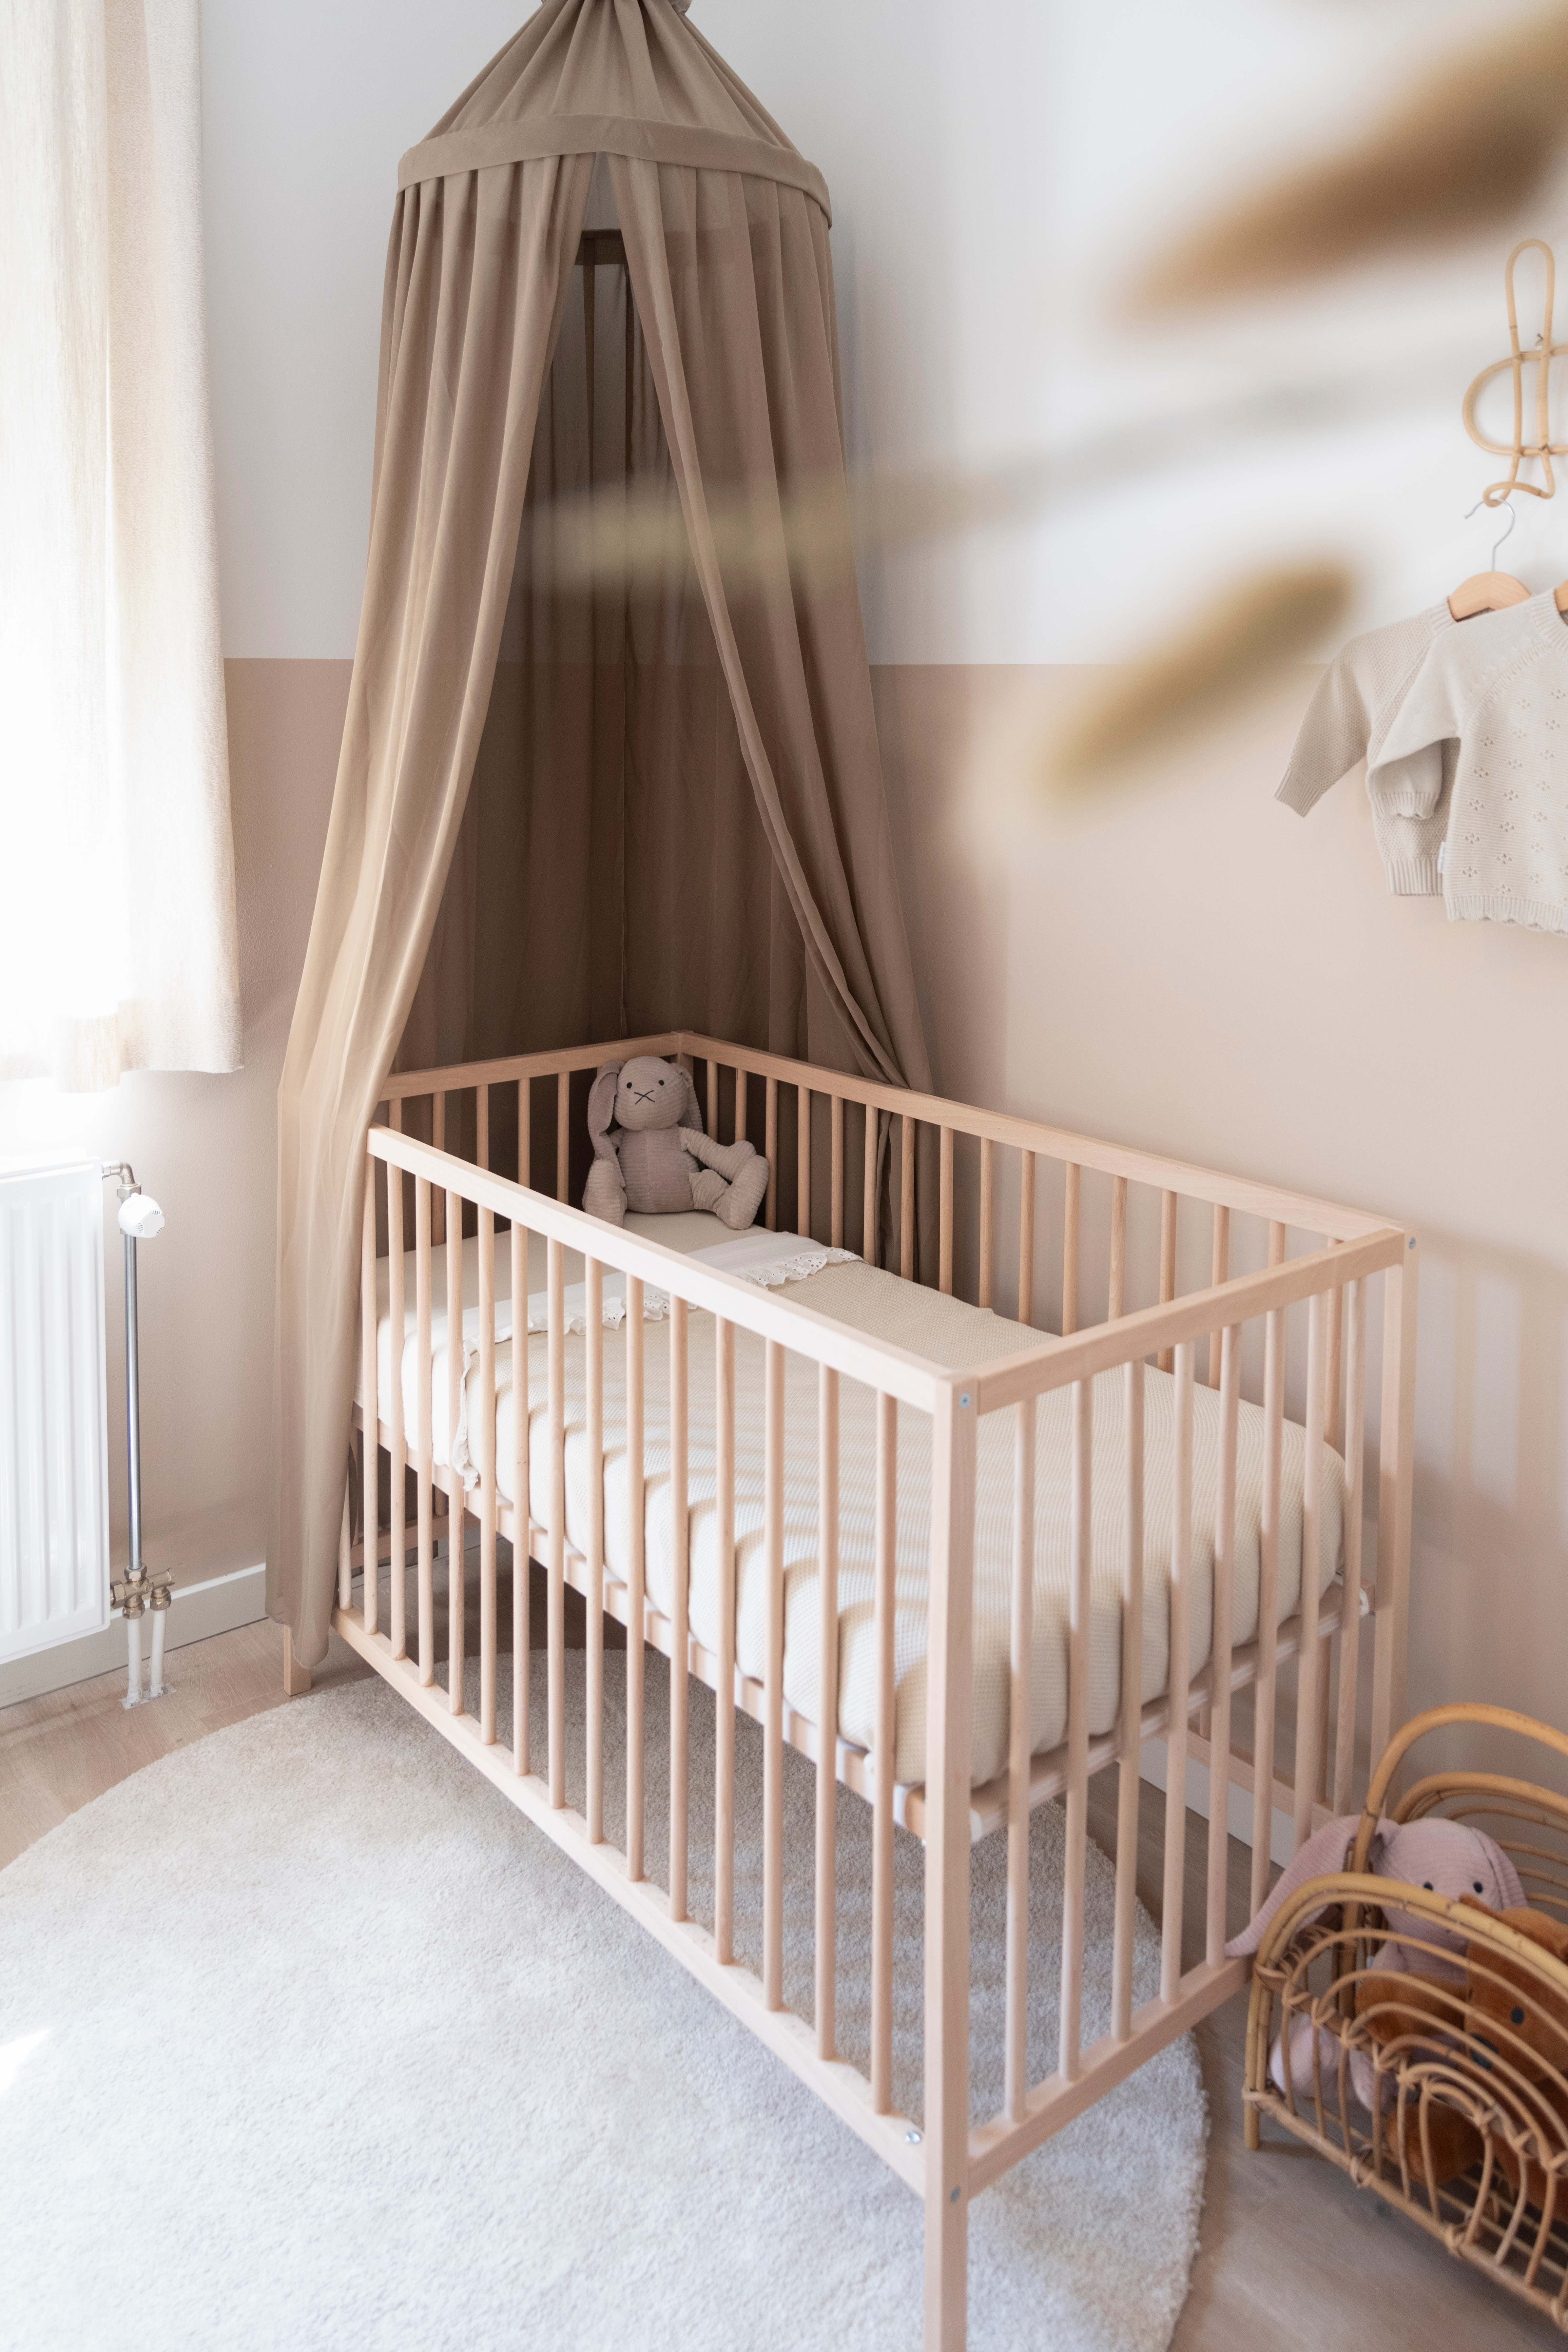 Baby crib sheet Calm white - with ruffle